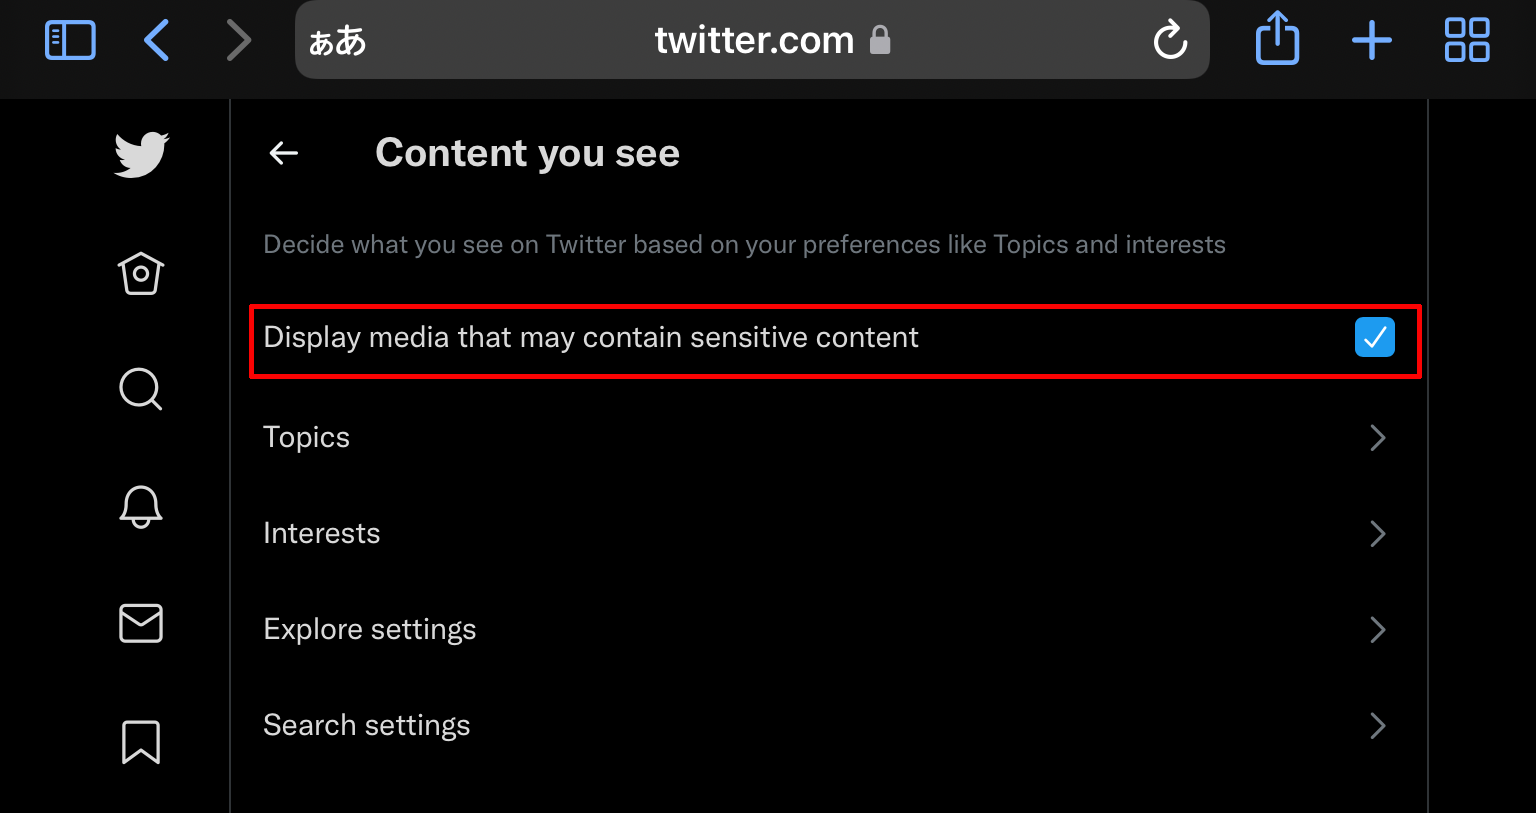 ④「Display media that may contain sensitive content」にチェックを入れる